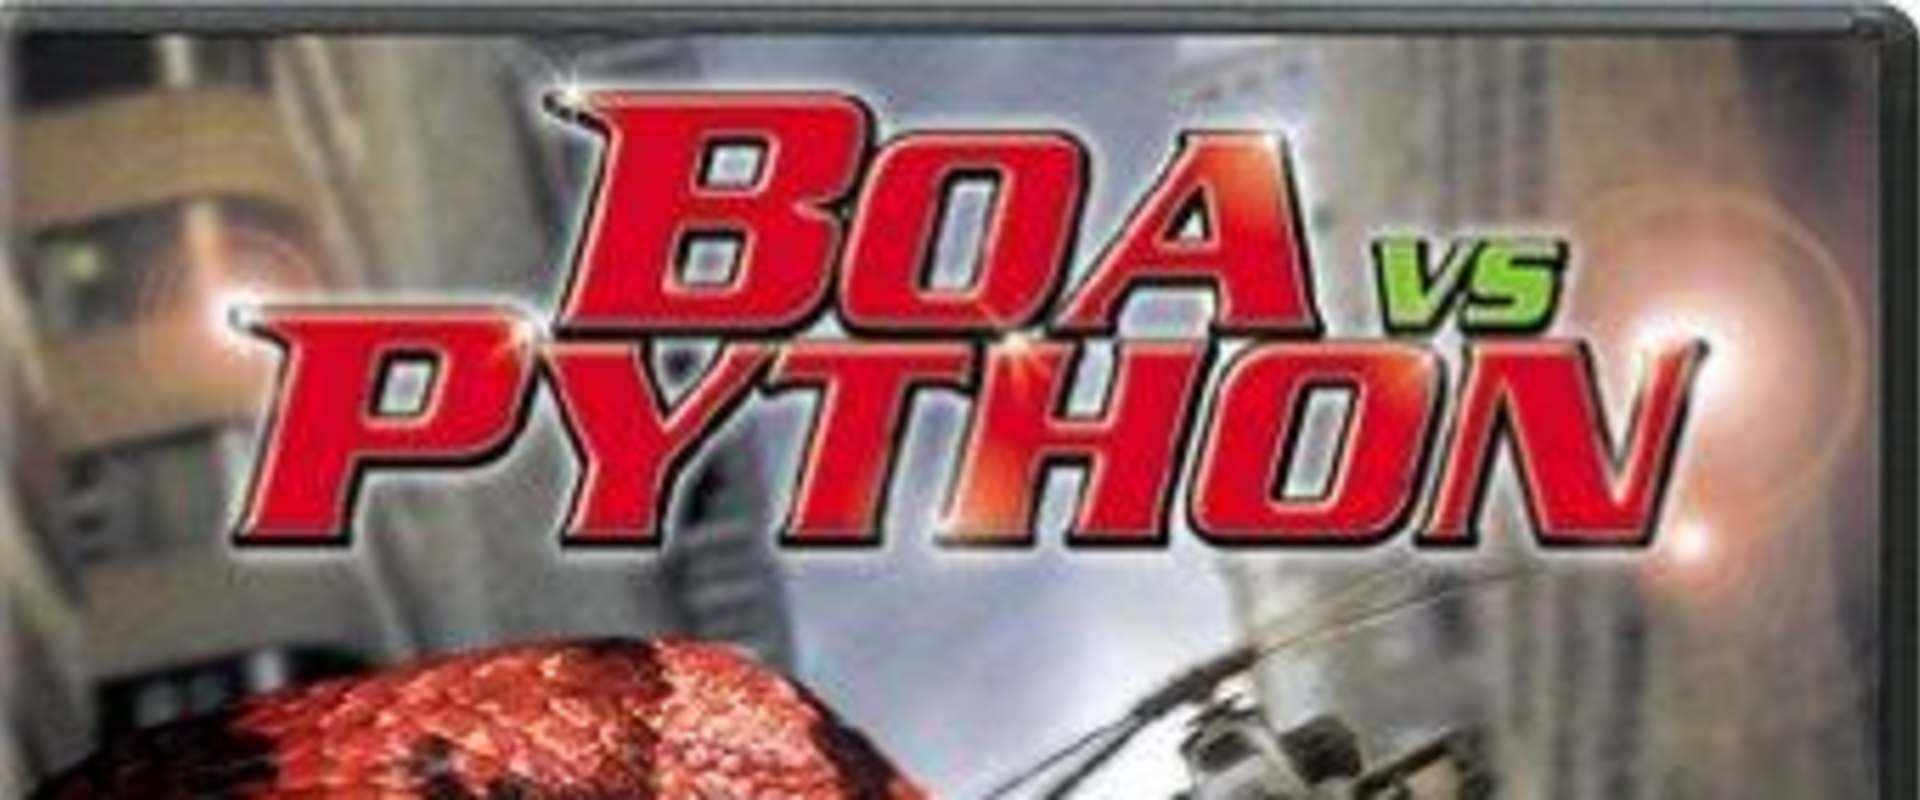 boa vs python broddick